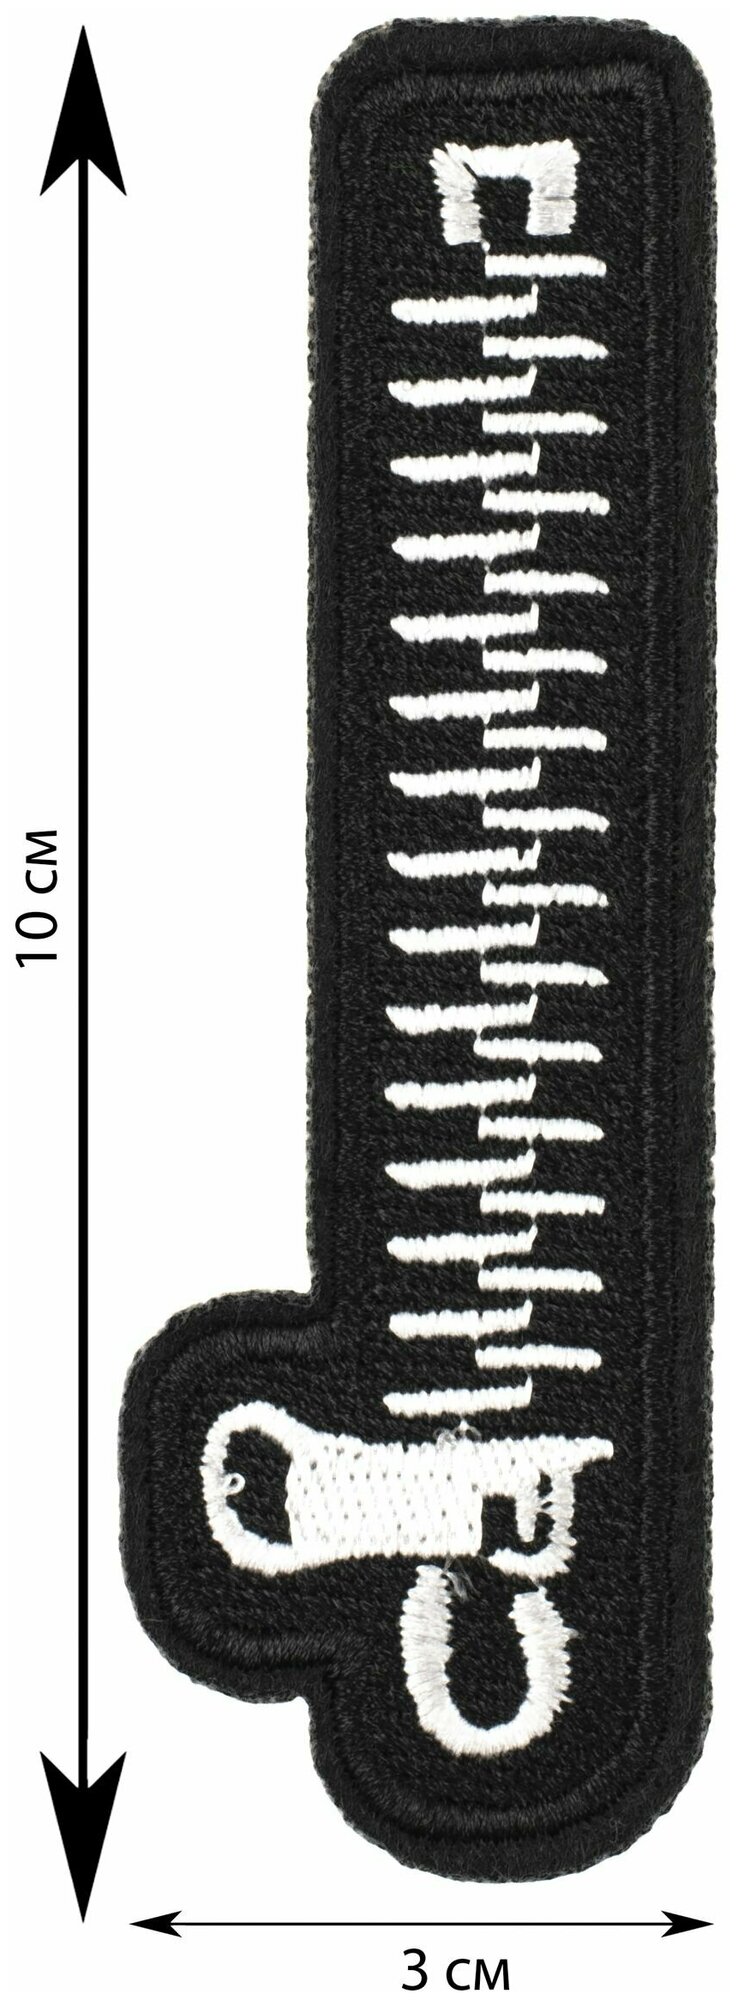 Нашивка шеврон патч (patch) на липучке Ширинка размер 10*3 см 1 шт.